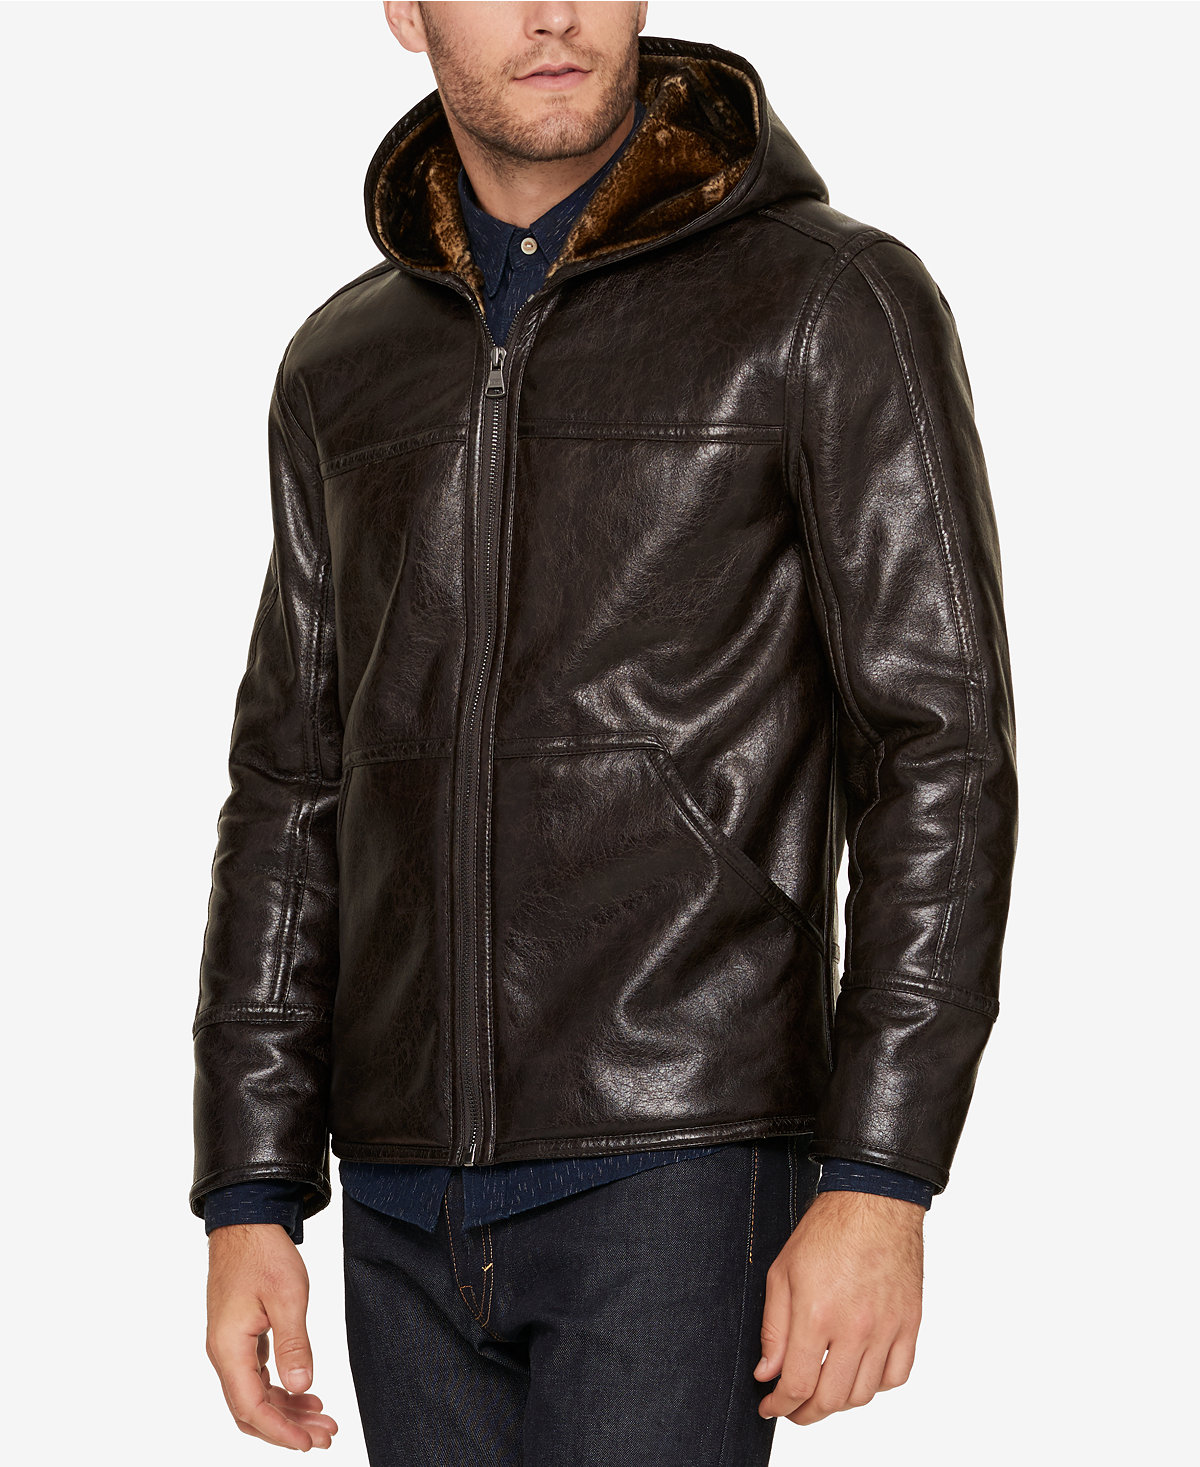 Mens faux leather jackets uk